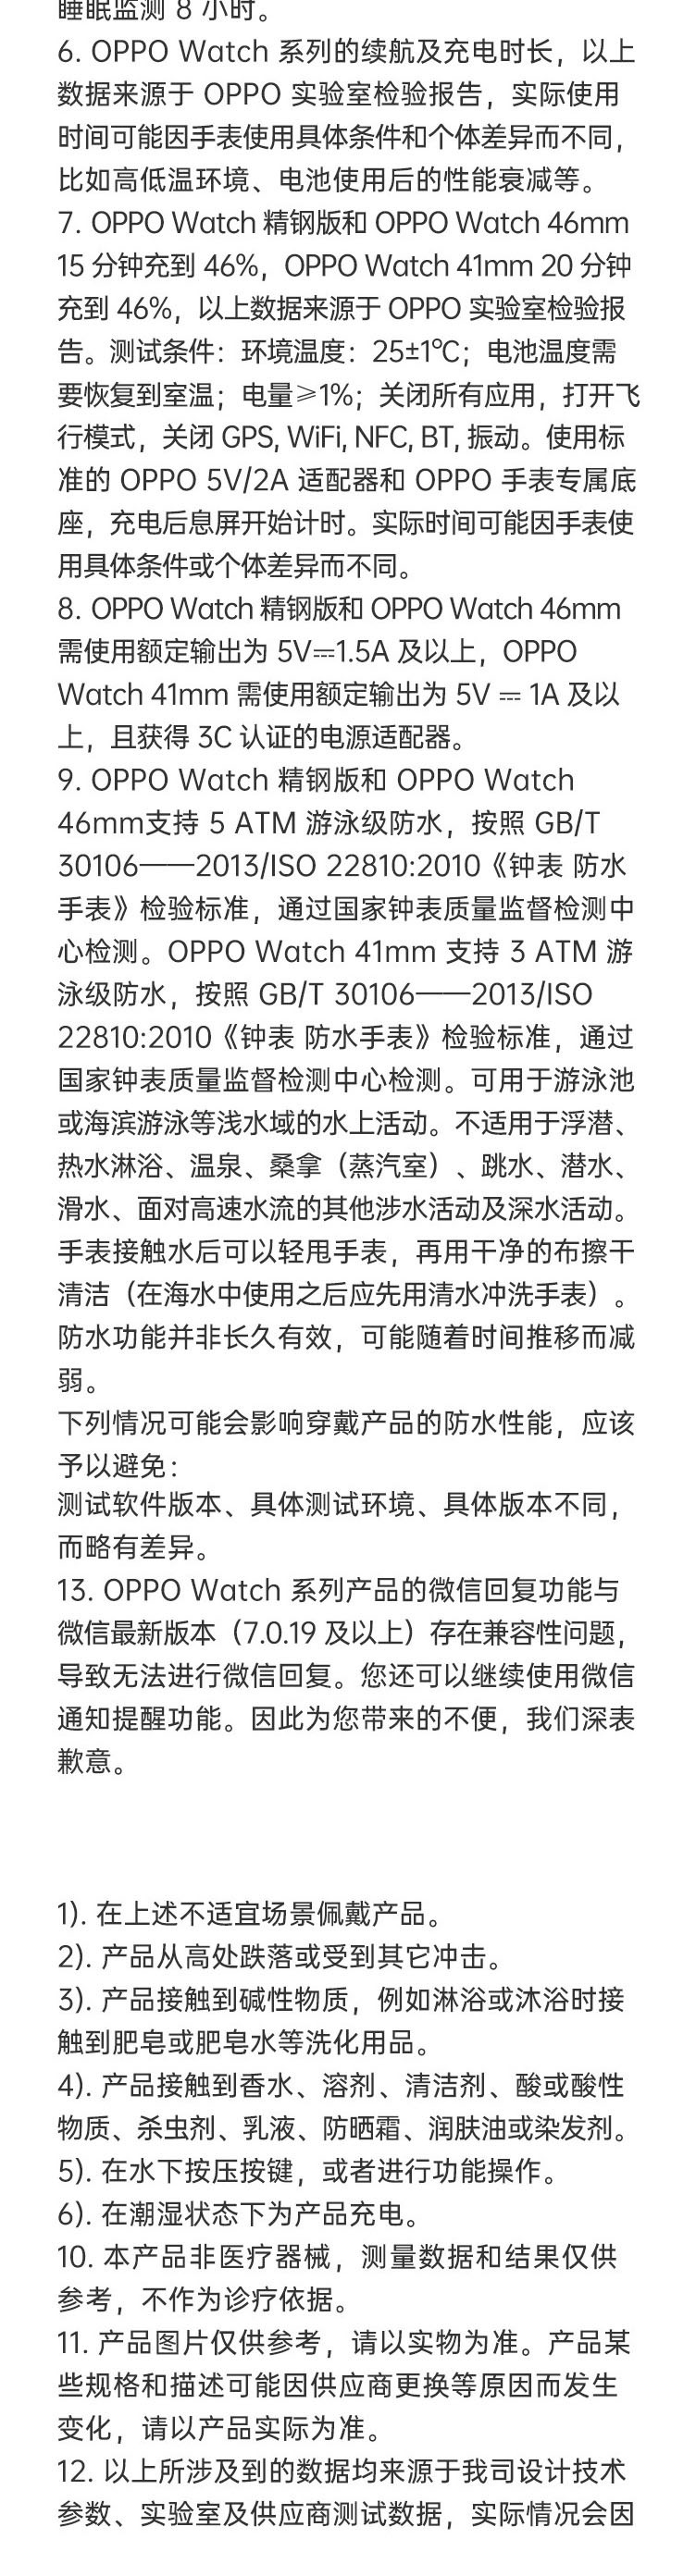 OPPO Watch 精钢版智能手表蓝牙运动手环